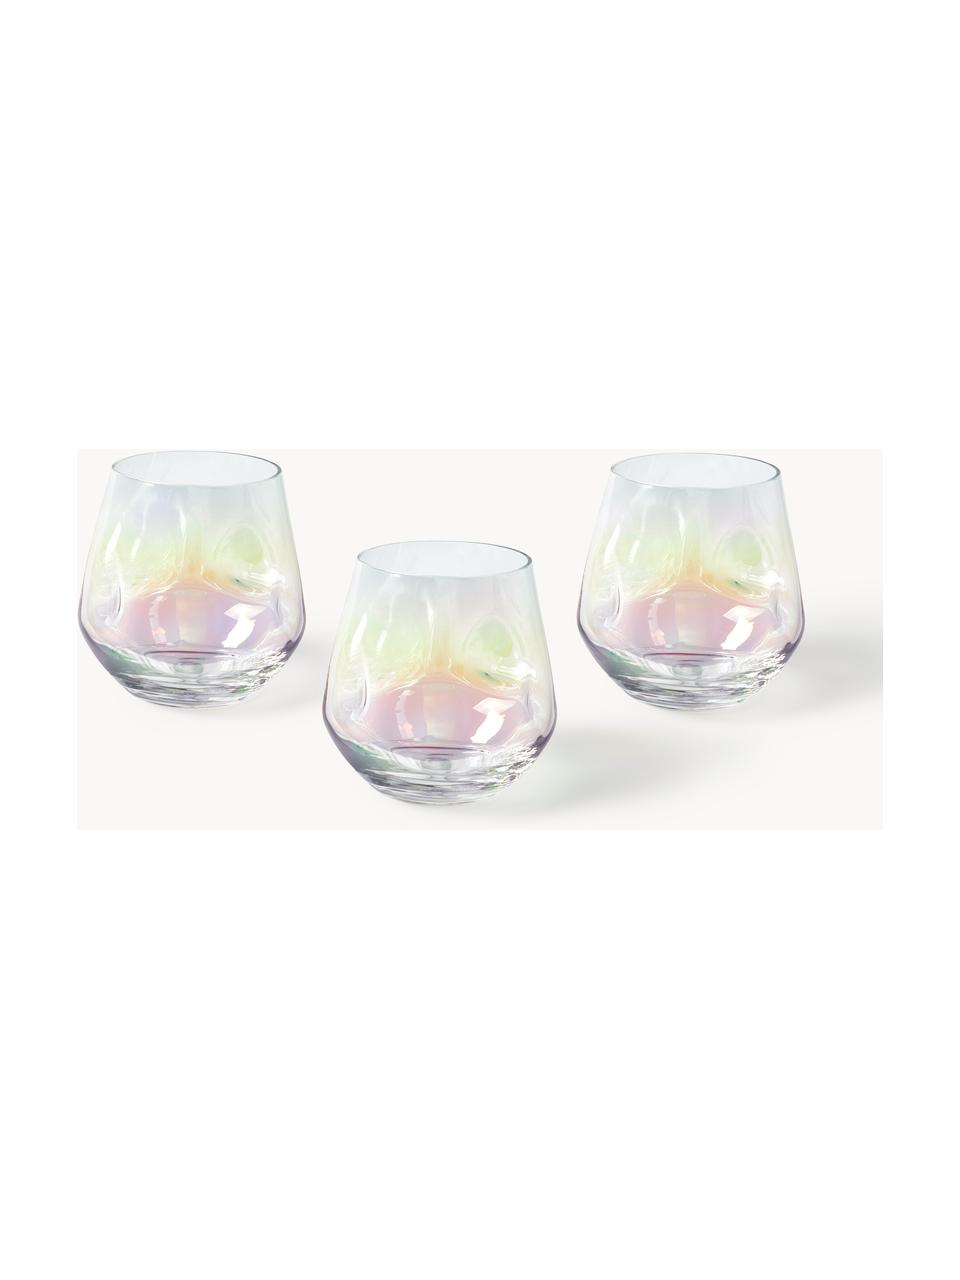 Set de portavelas artesanales Rainbow, 3 uds., Vidrio, Transparente iridiscente, Ø 9 x Al 9 cm